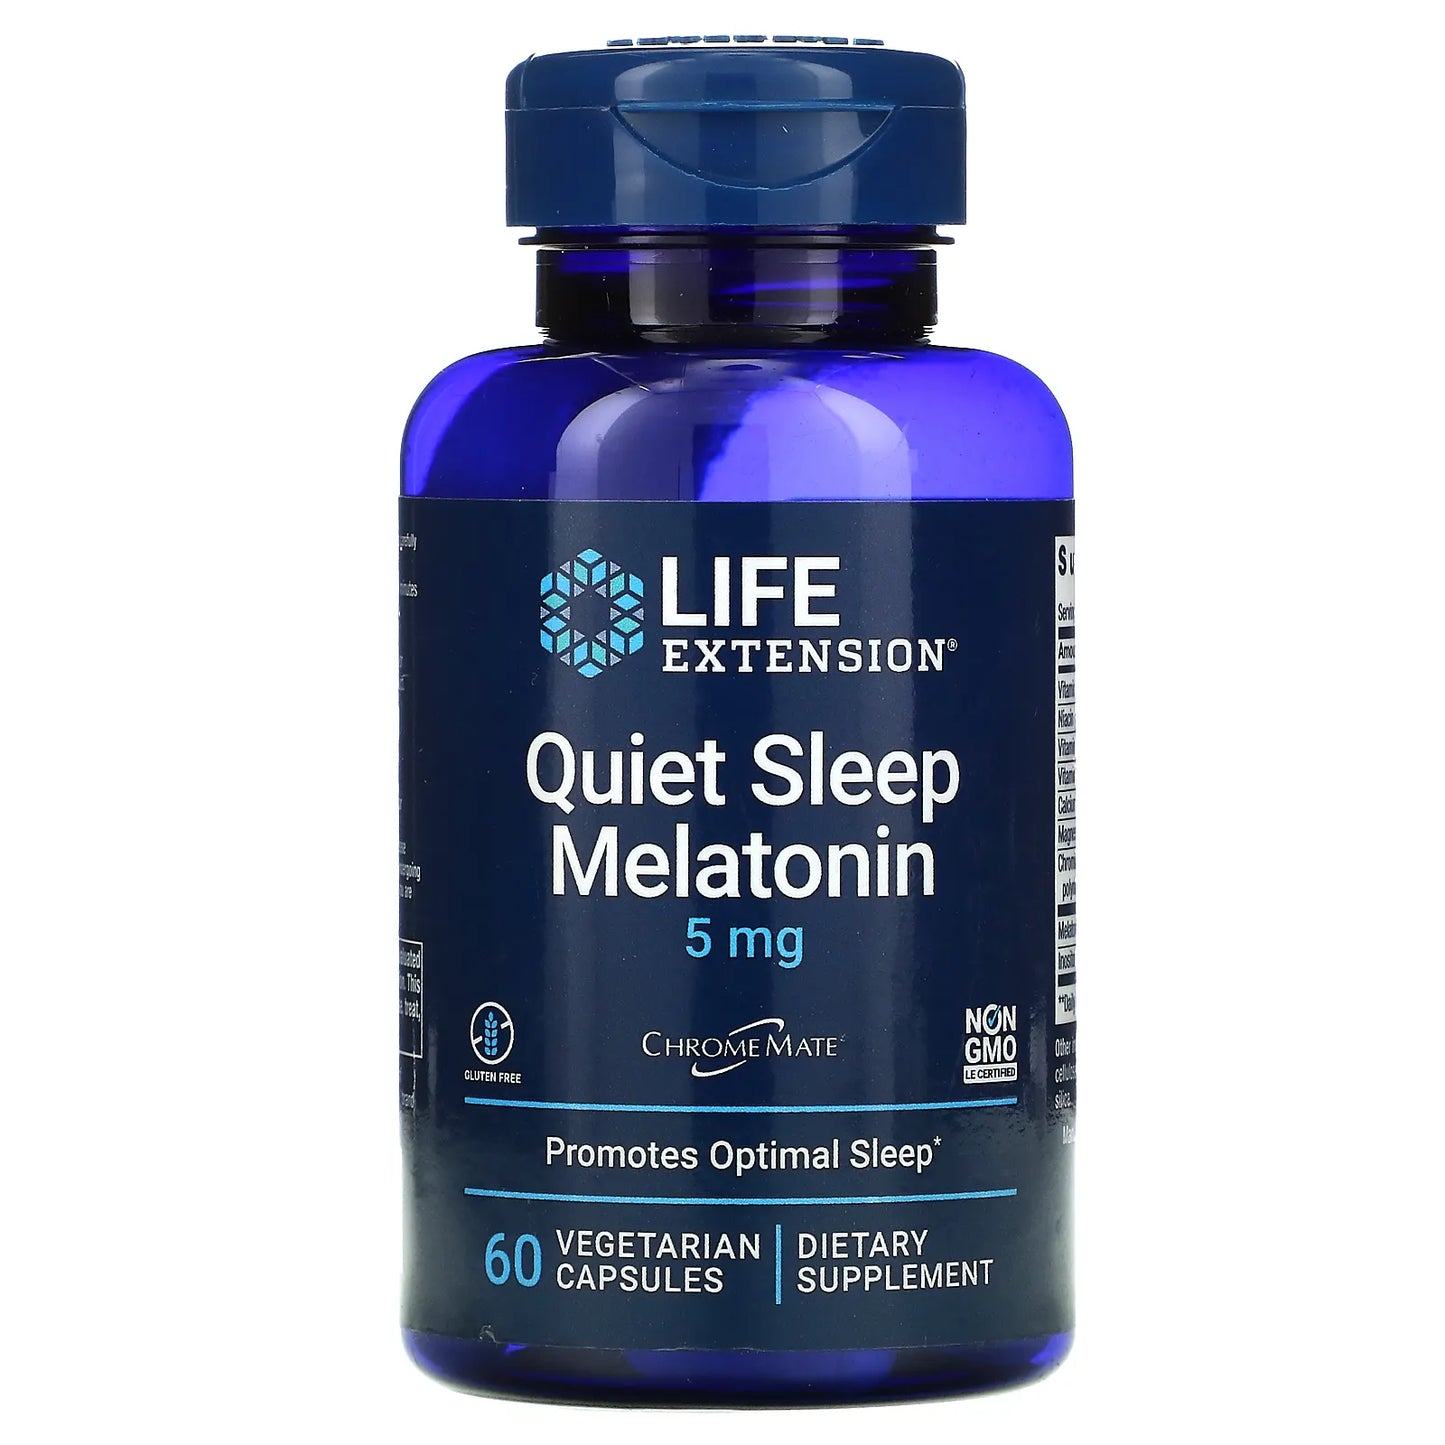 LIFE EXTENSION QUIET SLEEP MELATONIN 5MG, 60 VEG CAPSULES